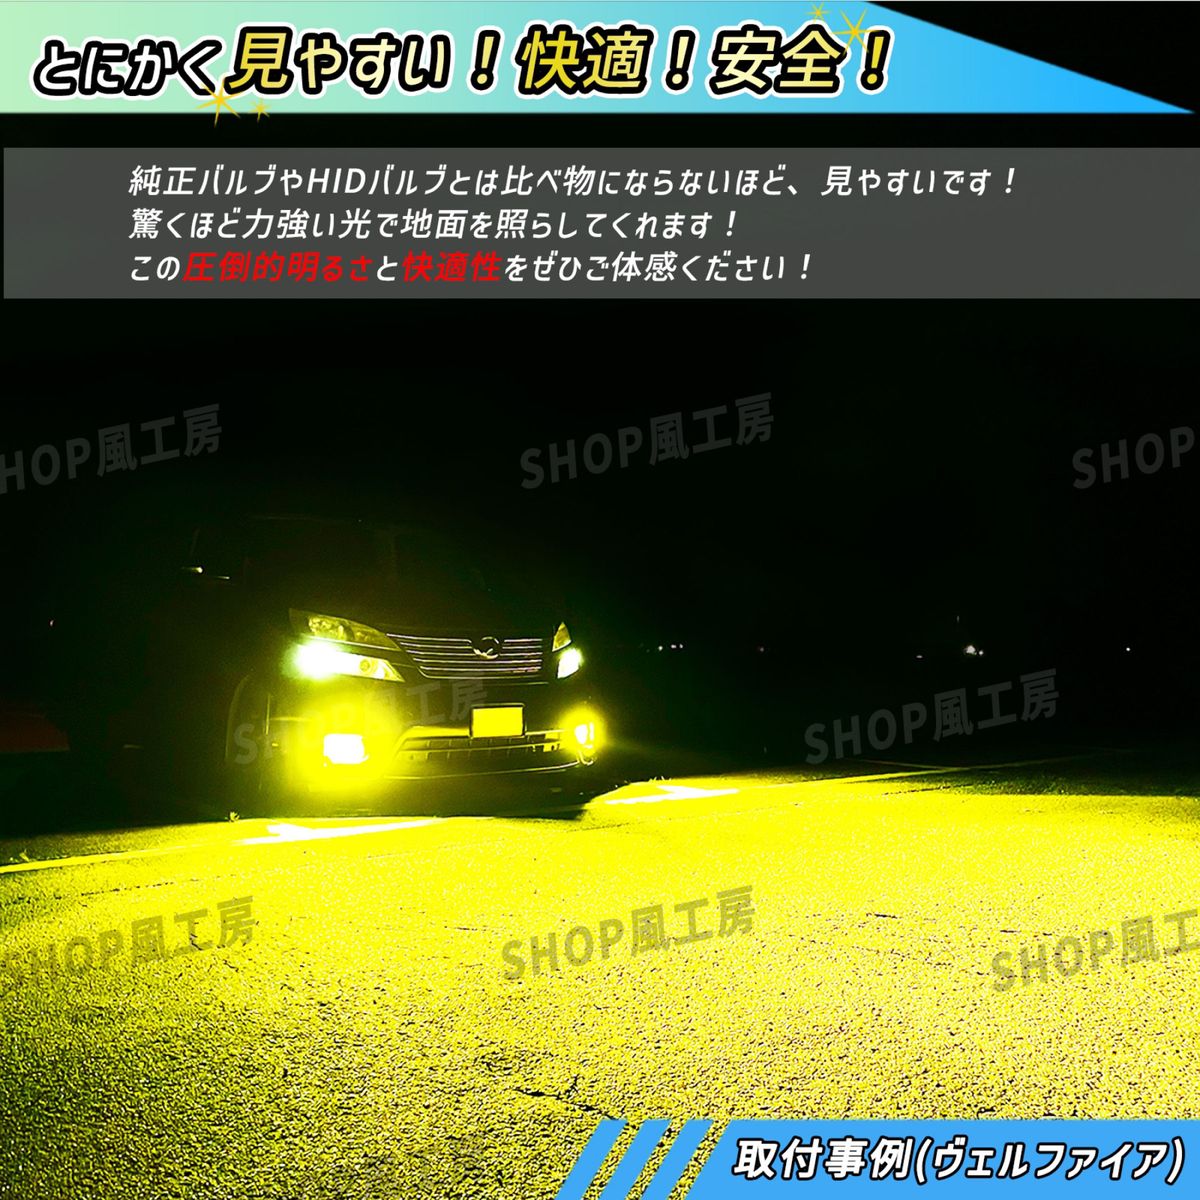 NUTSLAMP 車 ライト フォグライト フォグランプ H11 H8 LED 悪魔のイエロー  HID超え 超明るい 爆光 黄色